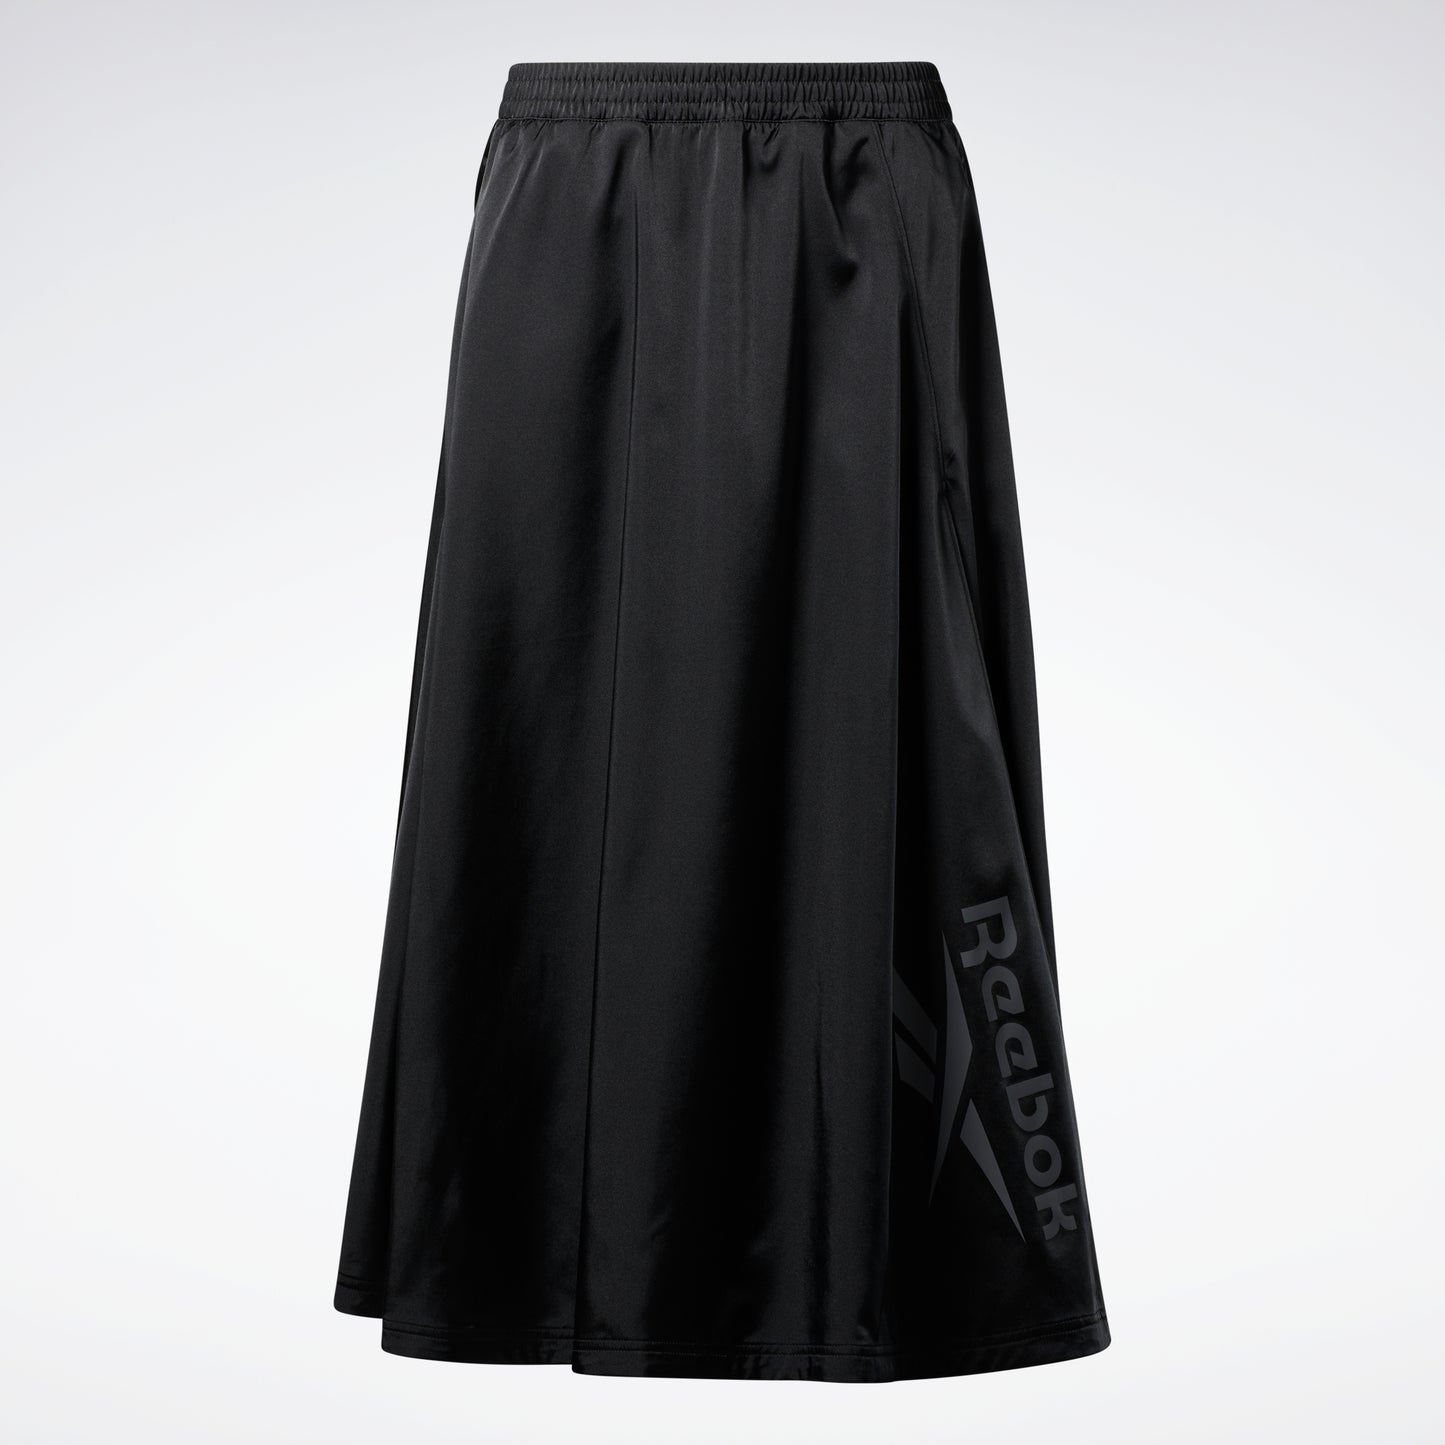 Reebok Apparel Women Classics Skirt Black